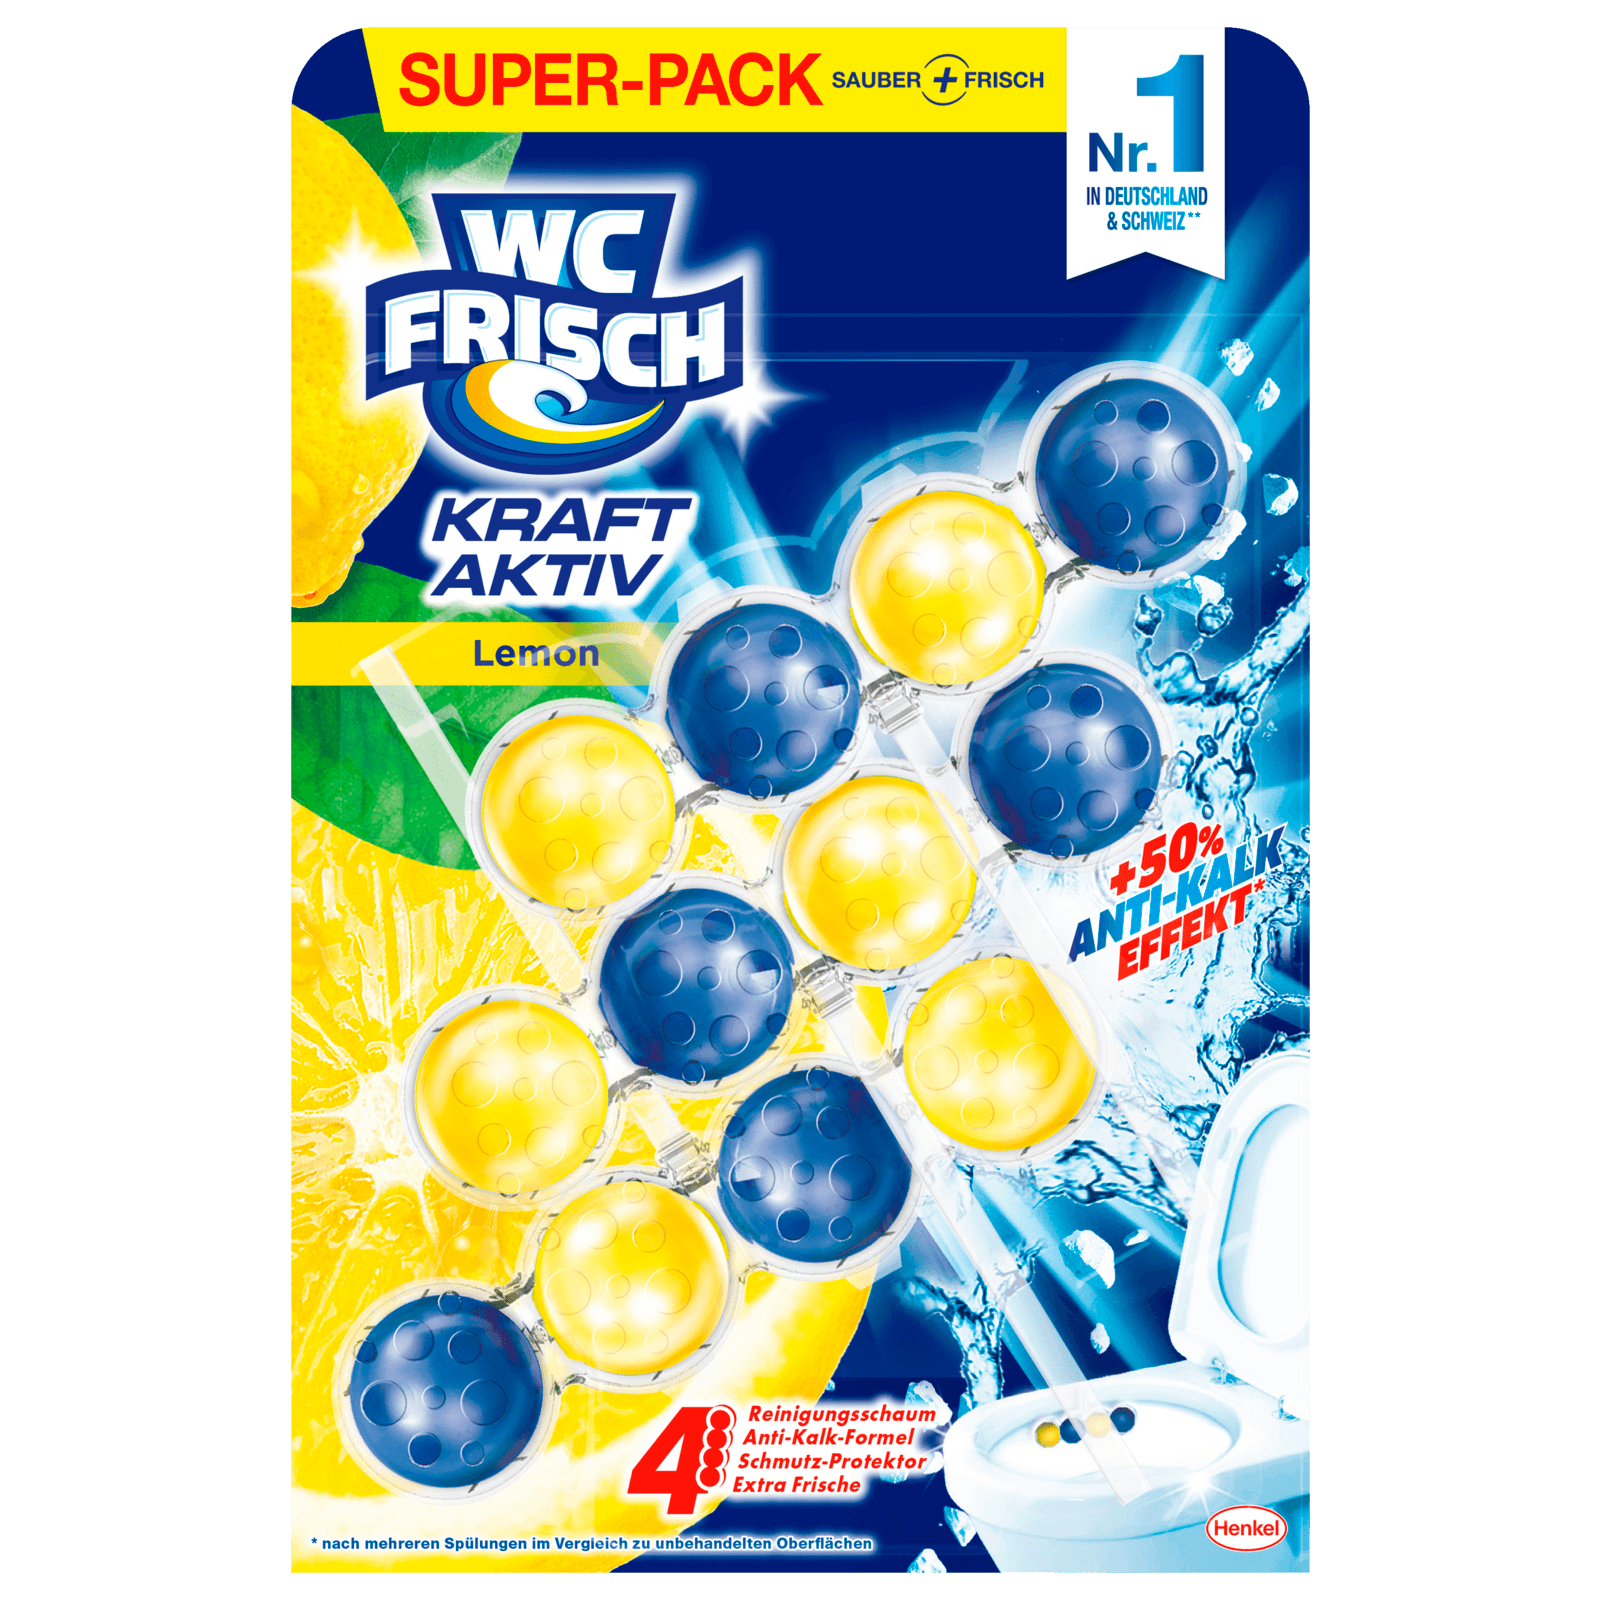 WC Frisch Kraft Aktiv Lemon Super-Pack 150g bei REWE online bestellen!